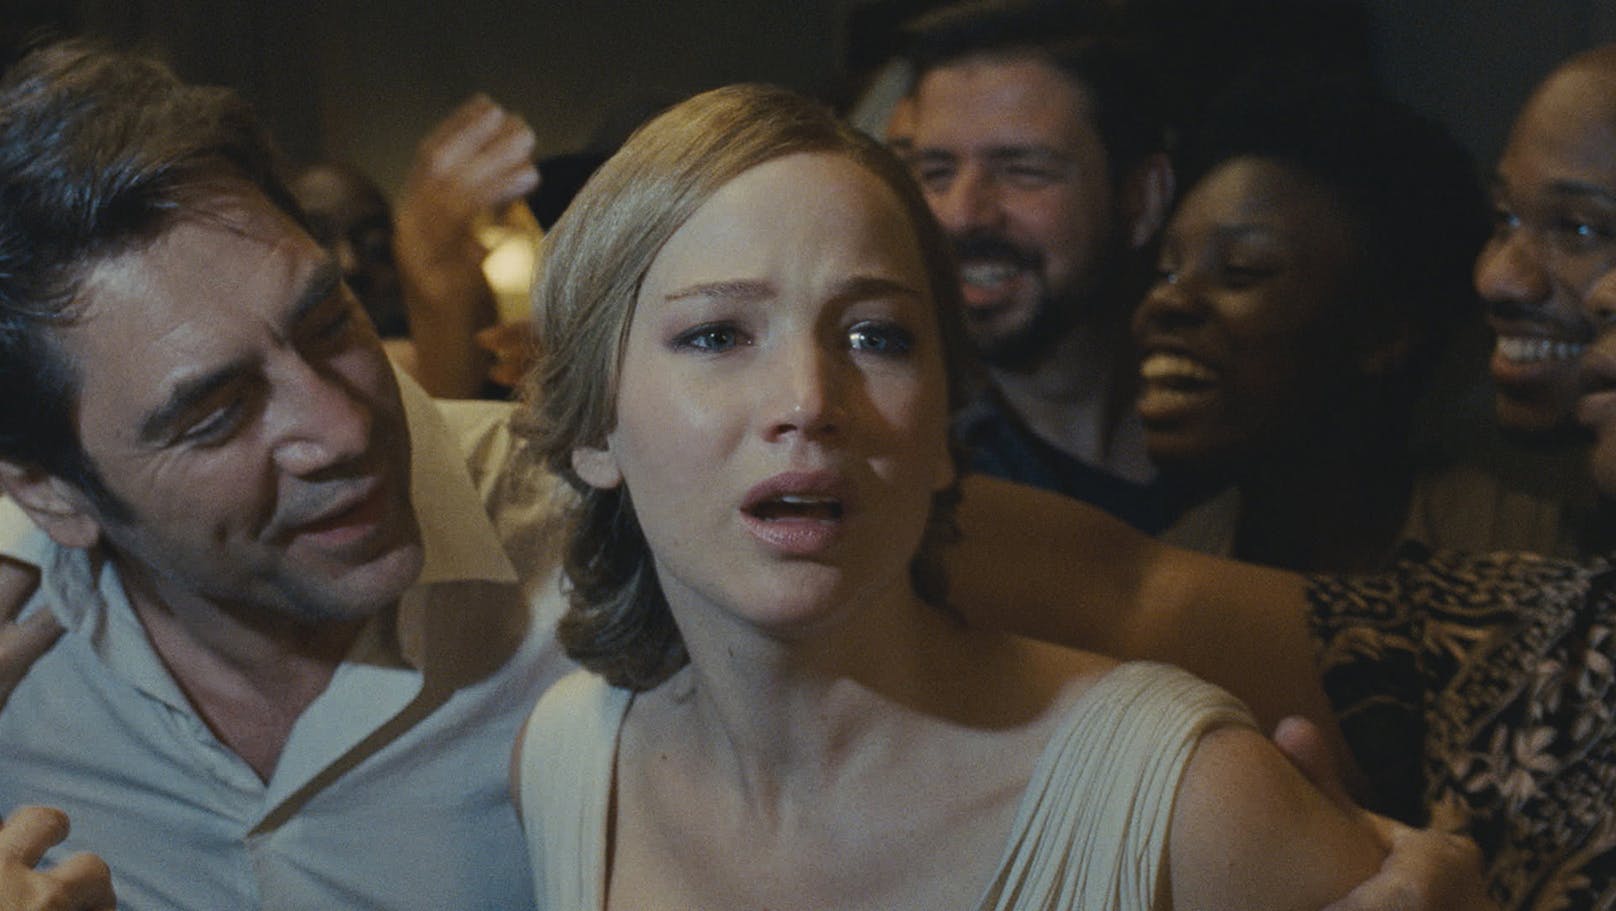 1.8. "Mother!": Horrorfilm mit Jennifer Lawrence